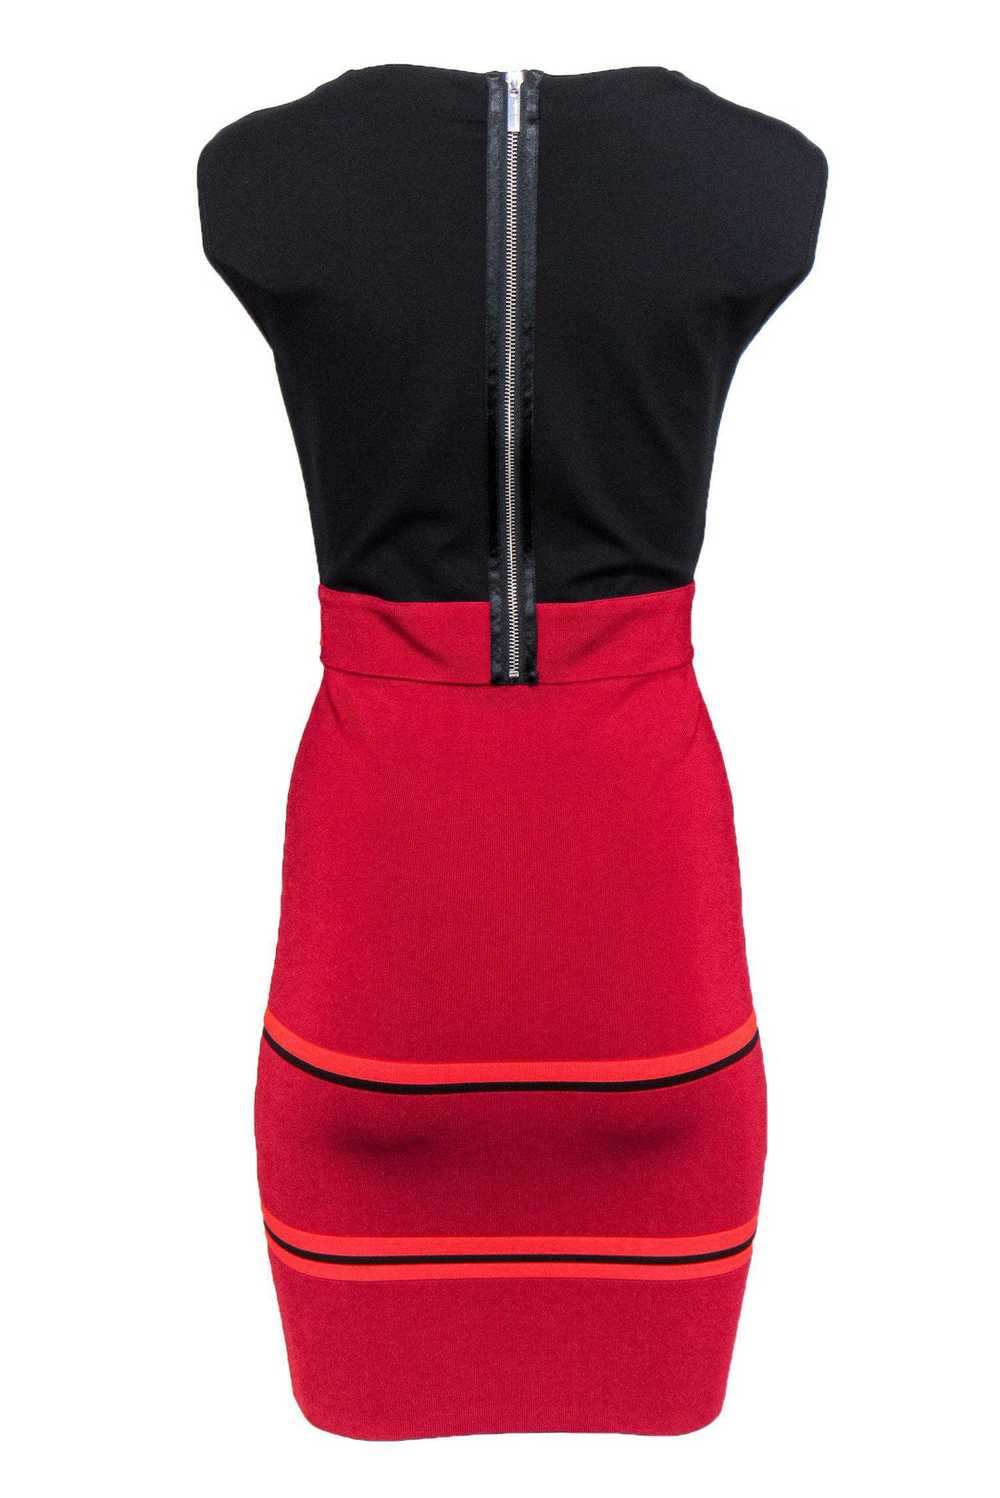 Karen Millen - Black & Red Dress w/ Bandage Skirt… - image 3